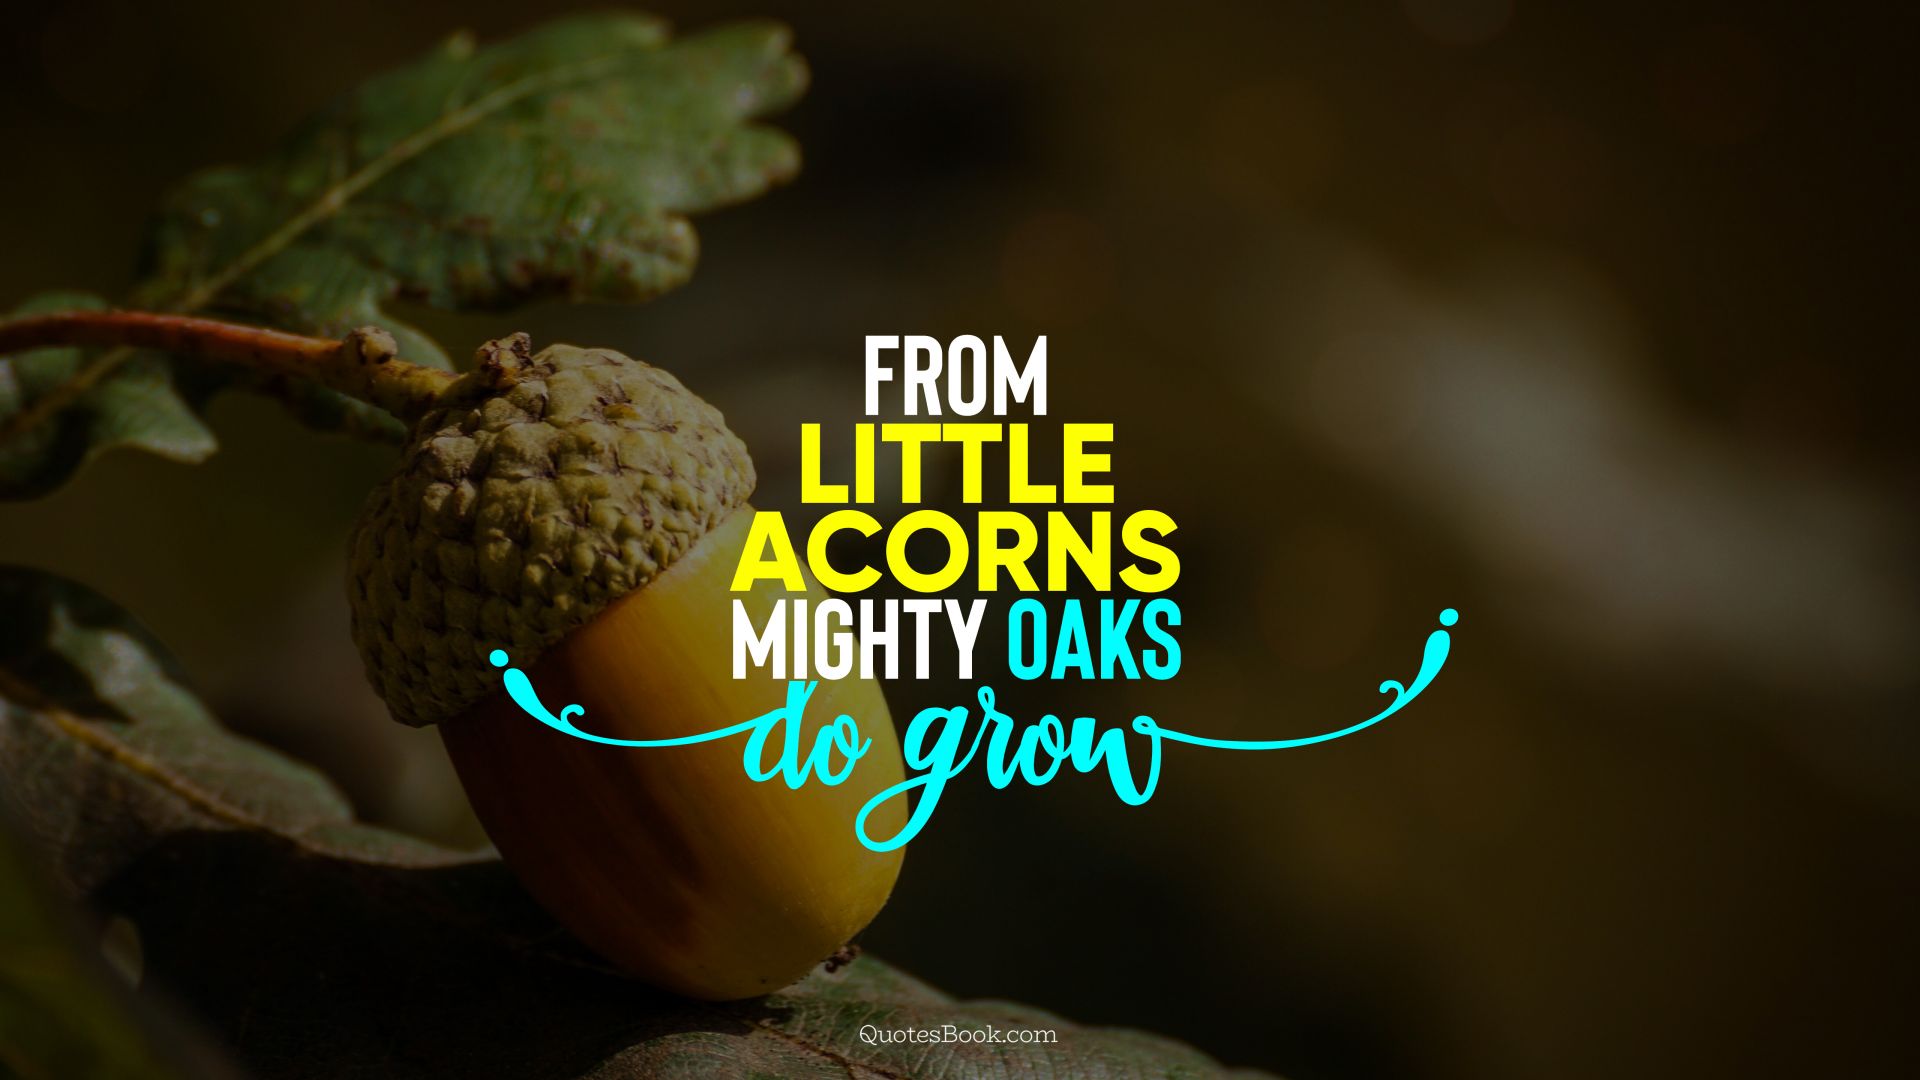 From little acorns mighty oaks do grow